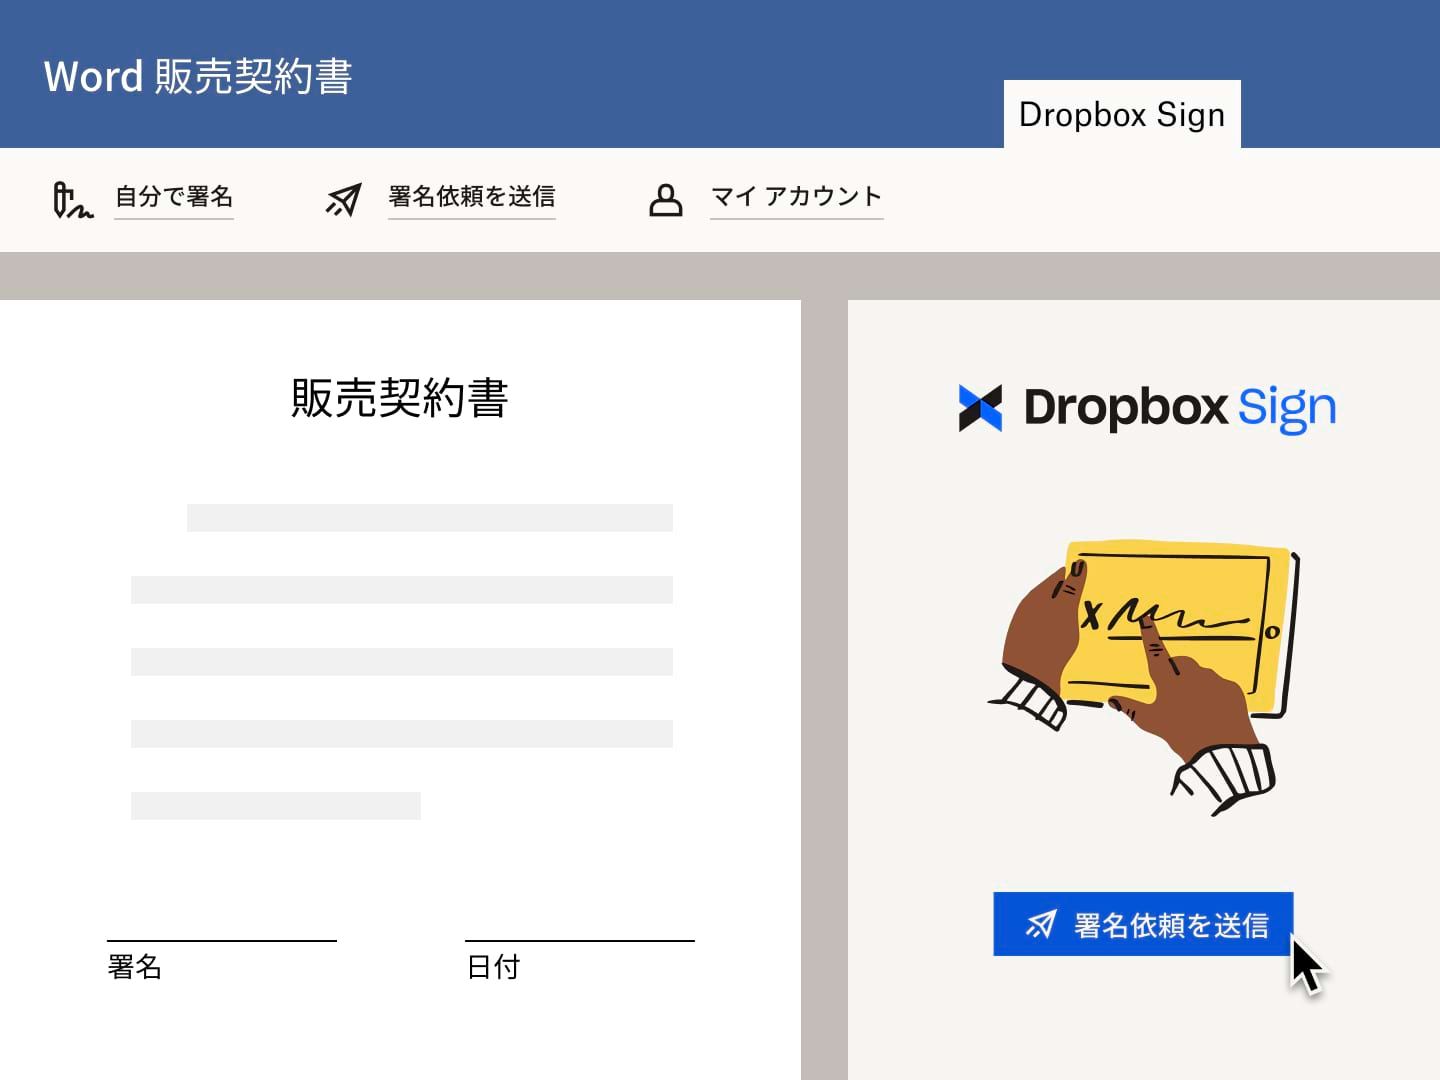 Microsoft Word の販売契約書を Dropbox Sign 電子署名依頼を使用して送信するユーザー